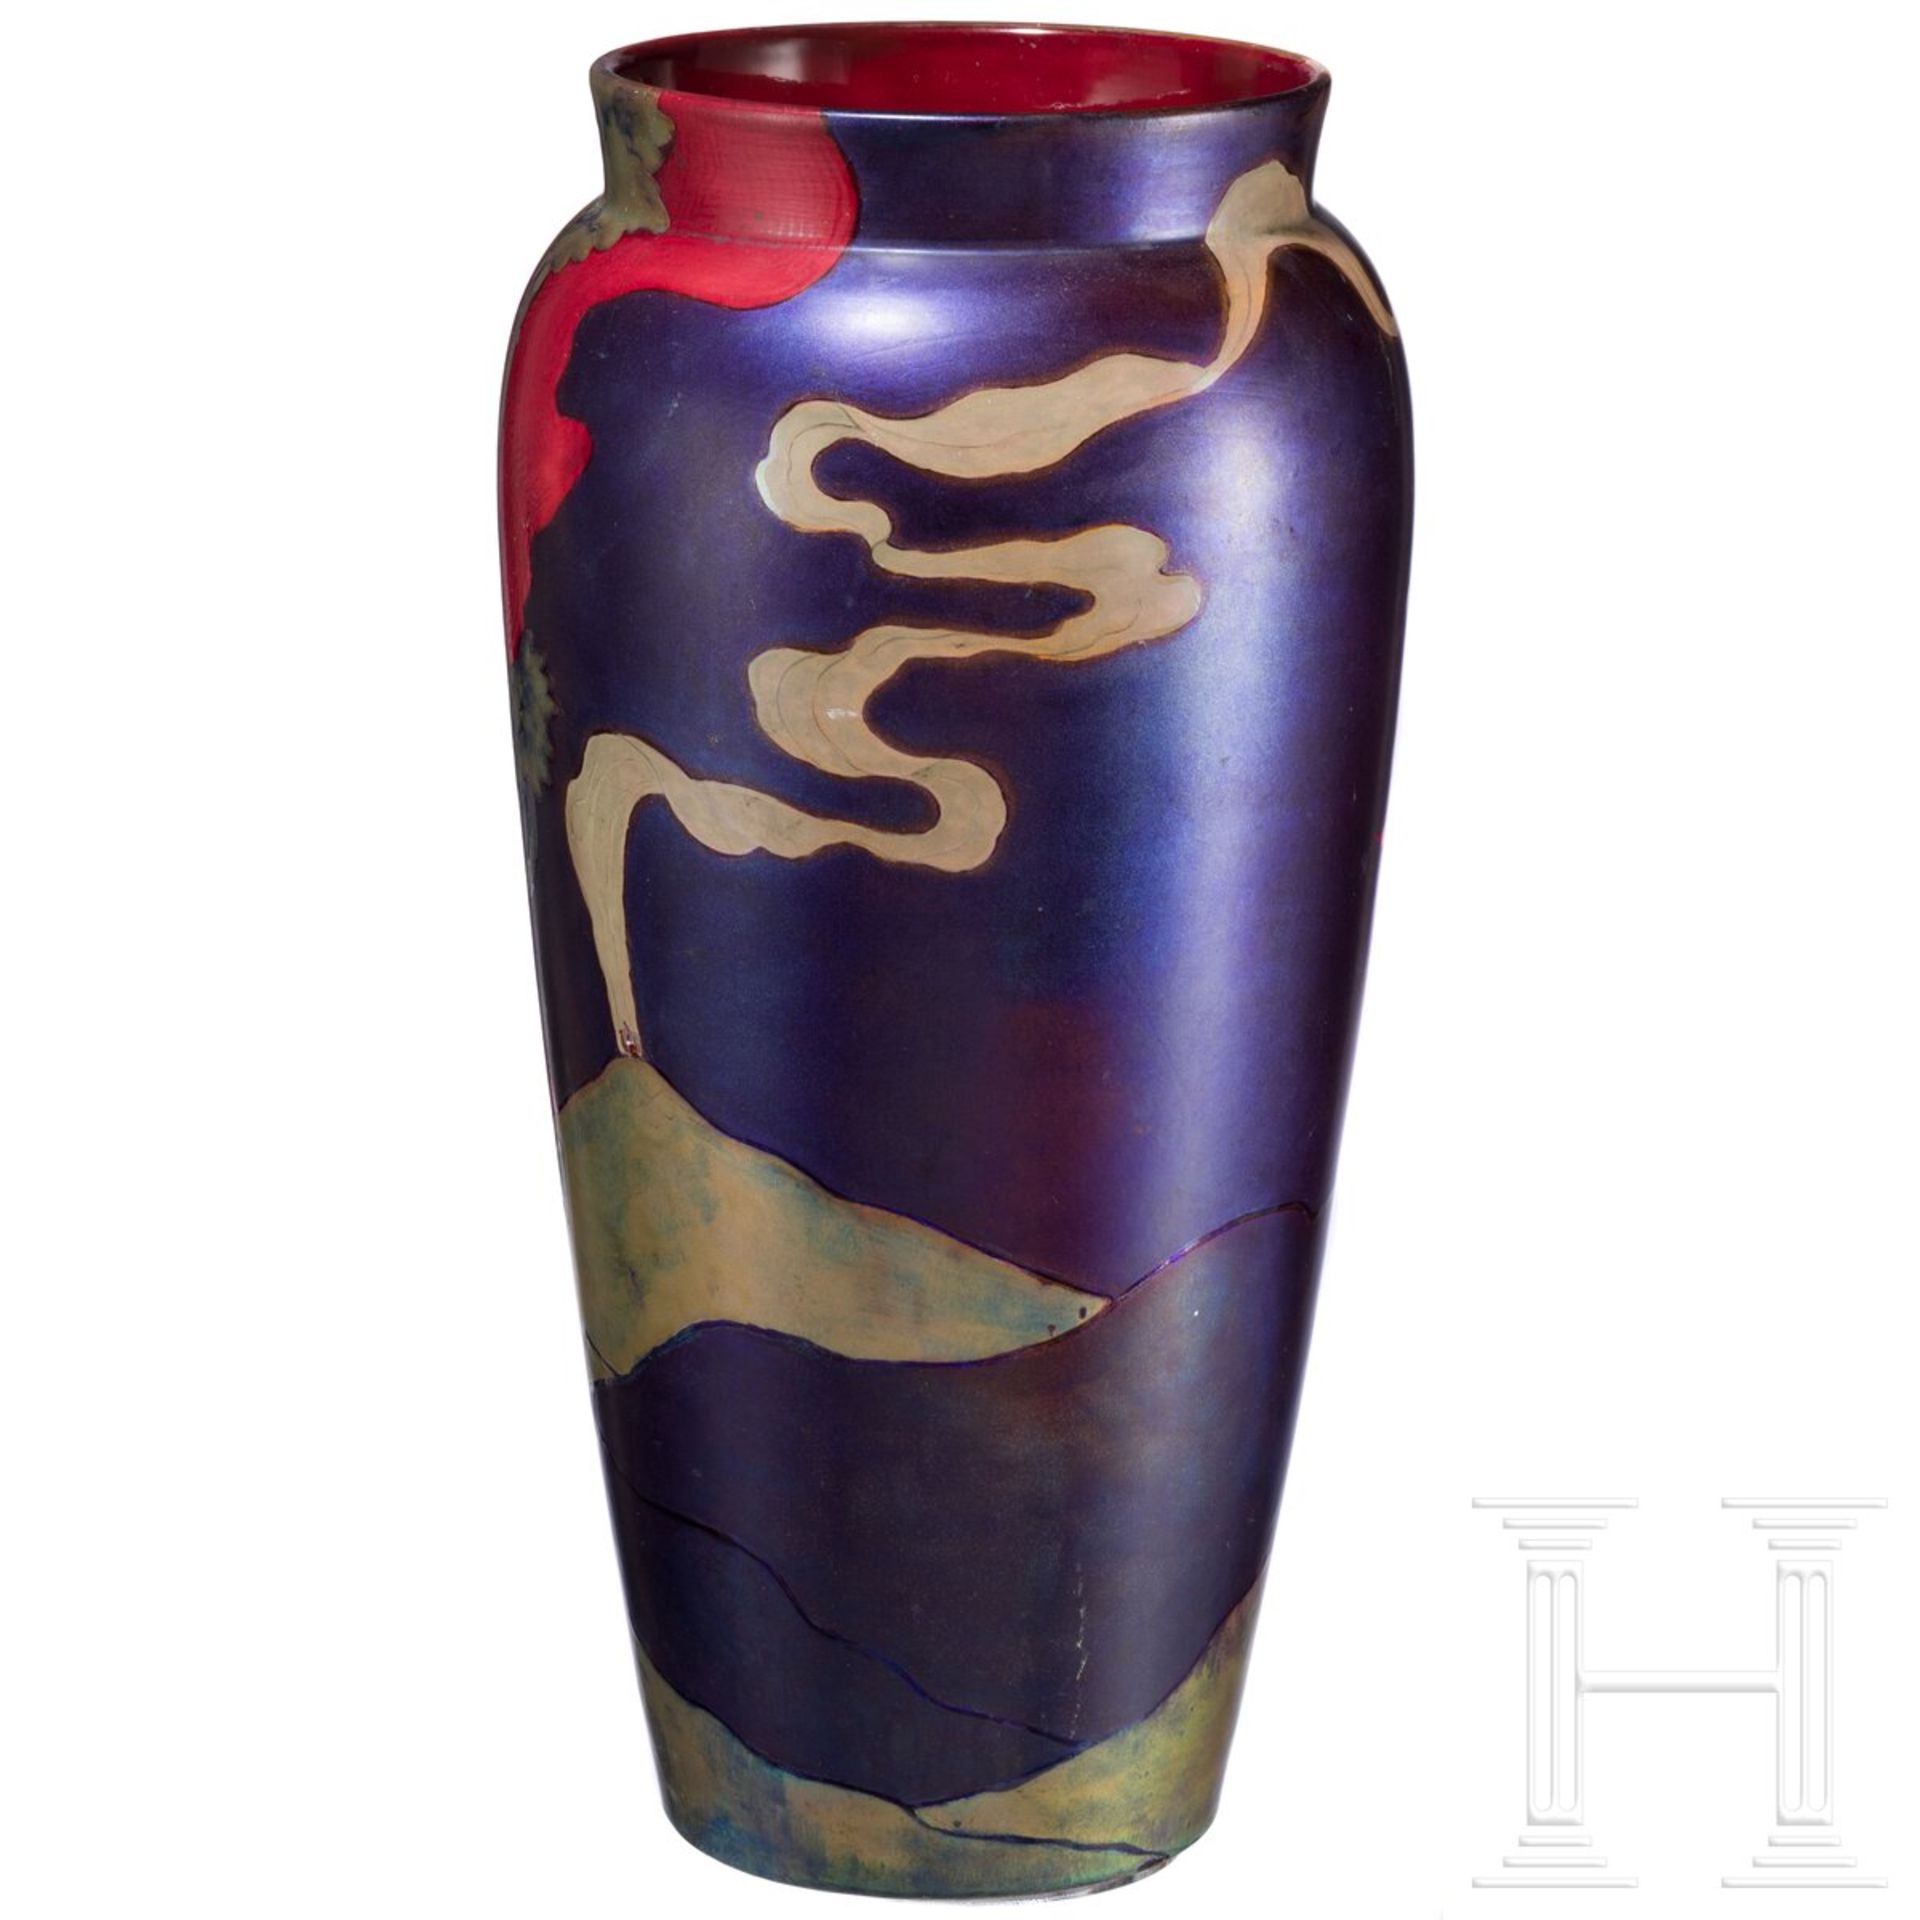 Große Jugendstil-Vase mit Landschaftsszene, Pecs (Fünfkirchen), Zsolnay, Entwurf wohl von Tade Sikor - Image 2 of 6